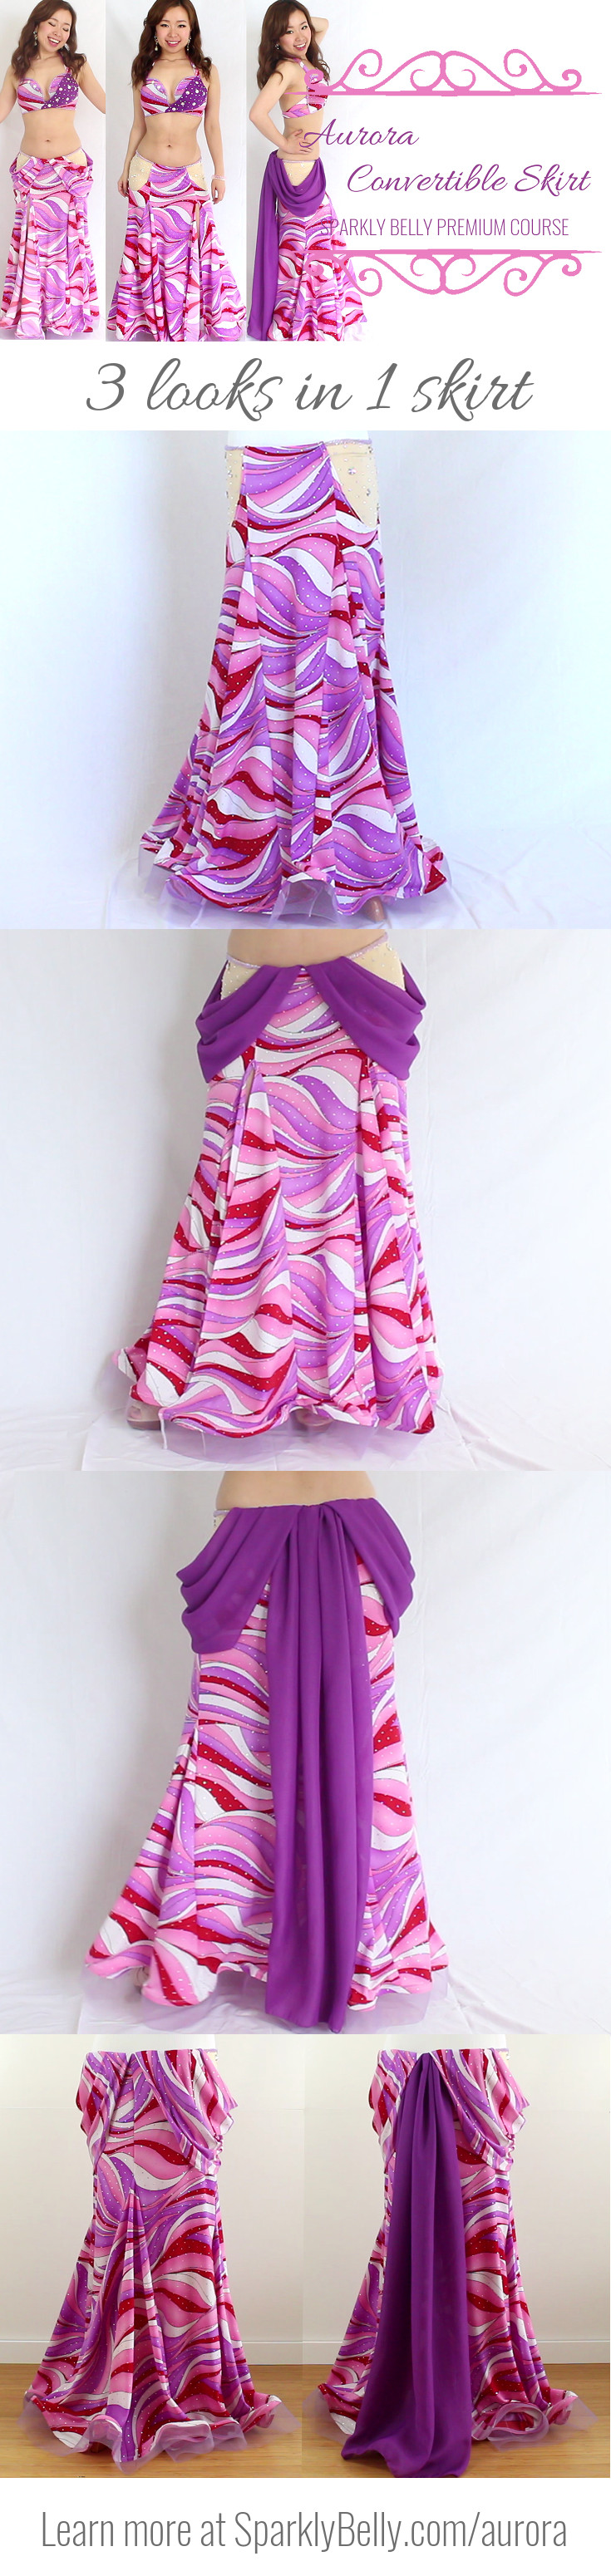 Aurora Convertible Skirt Premium Course 3 looks in 1 skirt